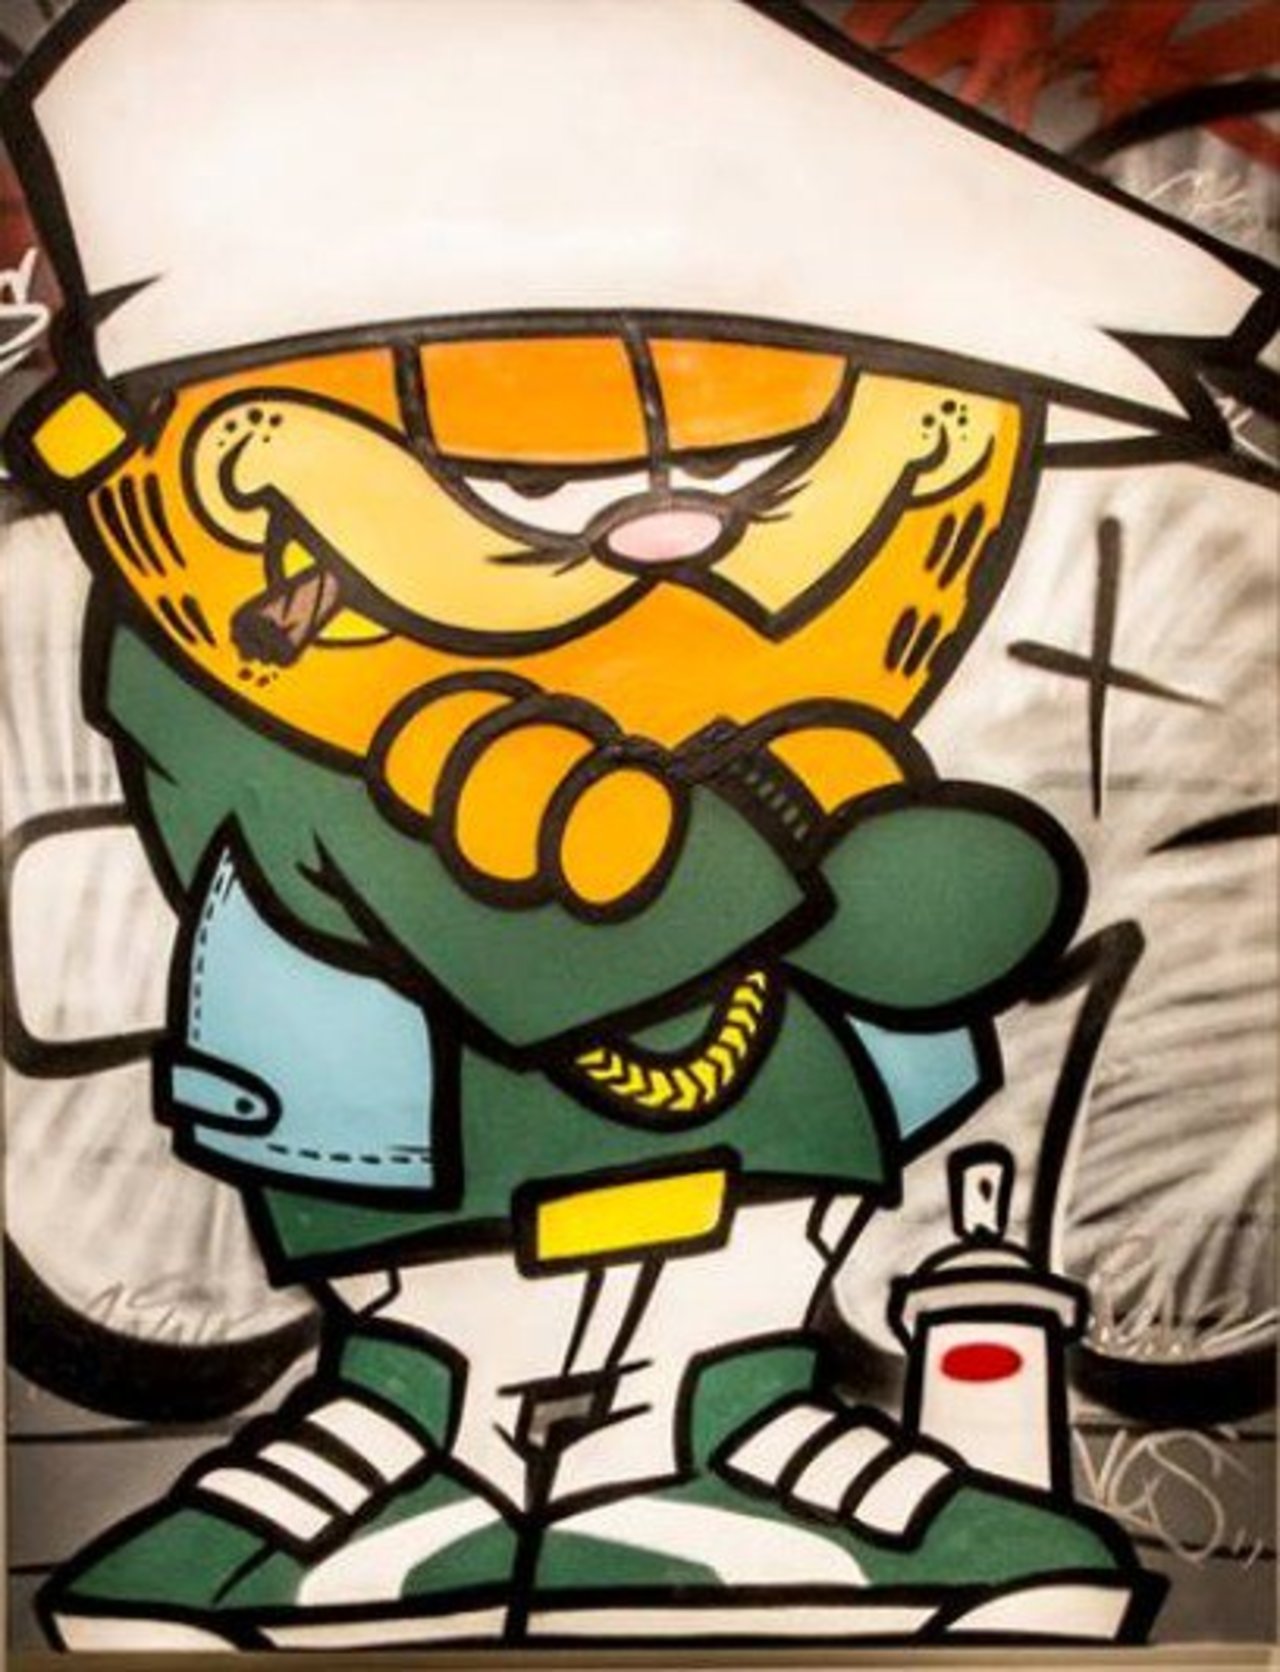 G DA FAT CAT
by #JaekElDiablo ()
#streetart #graffiti #art https://t.co/KCUrnipRzr